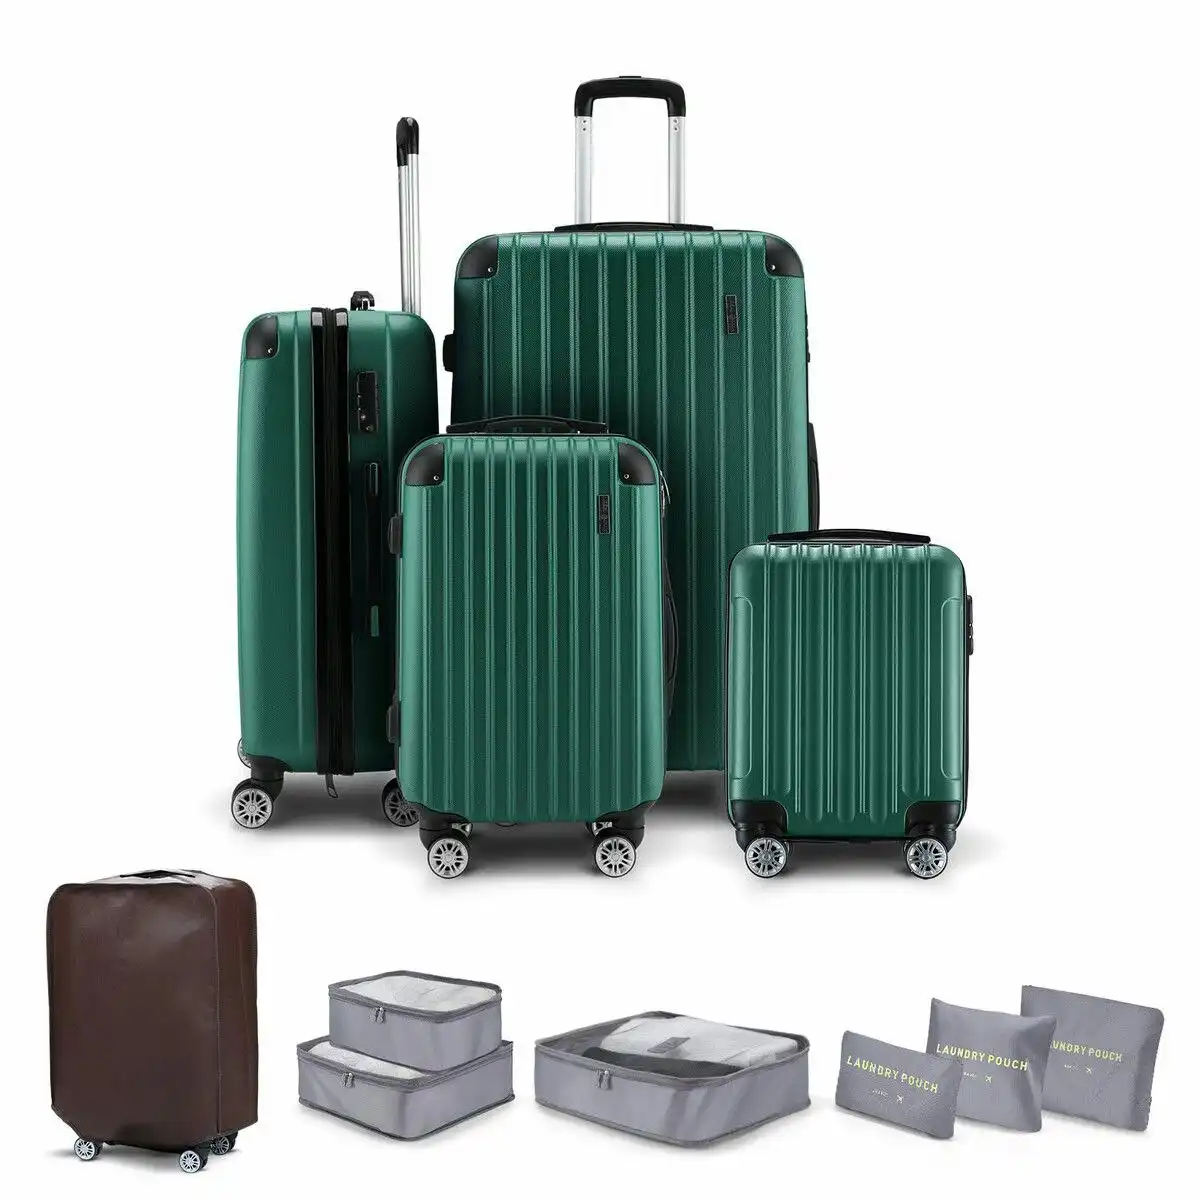 Buon Viaggio 4 Piece Luggage Set Travel Suitcase Traveller Bag Carry On Lightweight Checked Hard Shell Trolley TSA Lock Green